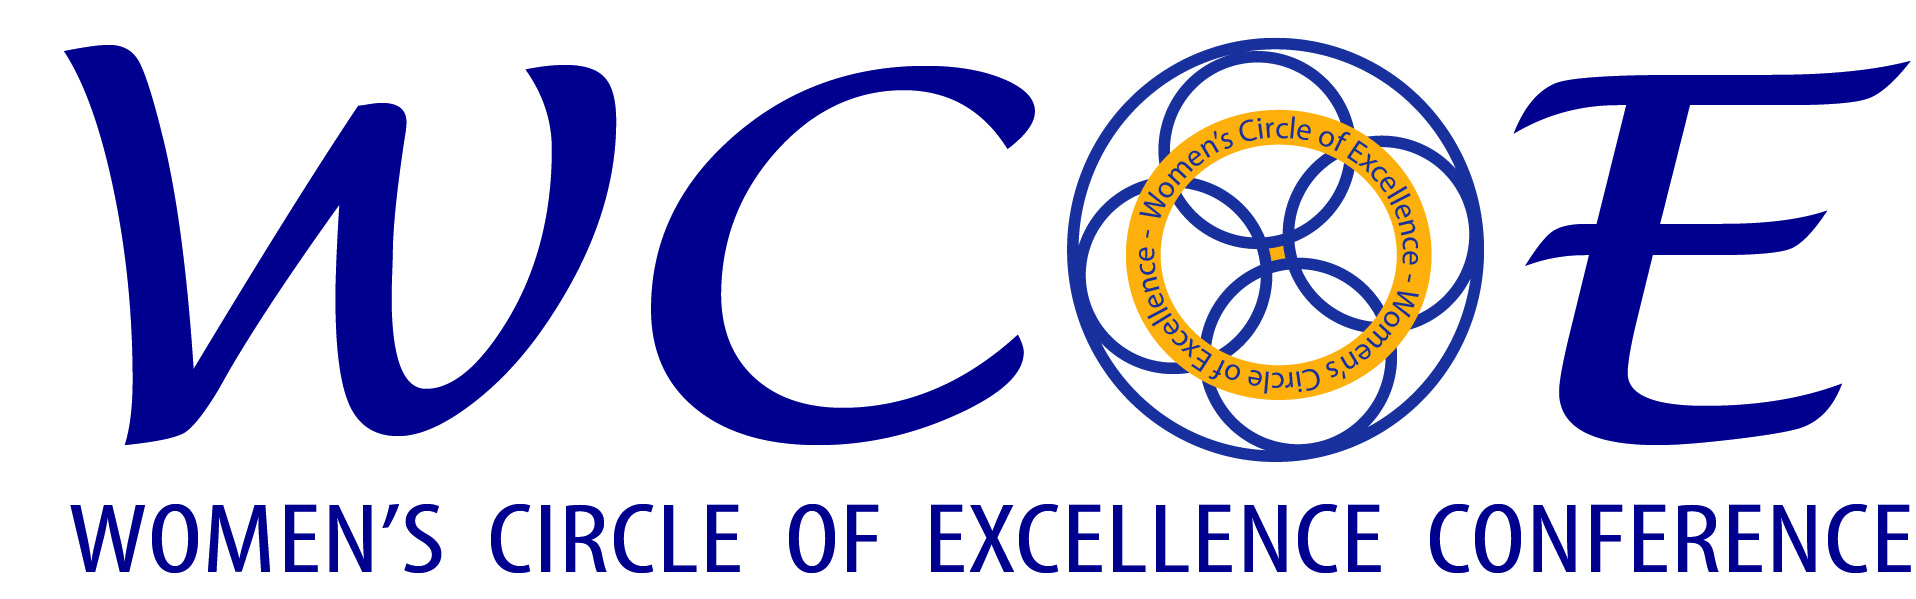 WCOE logo